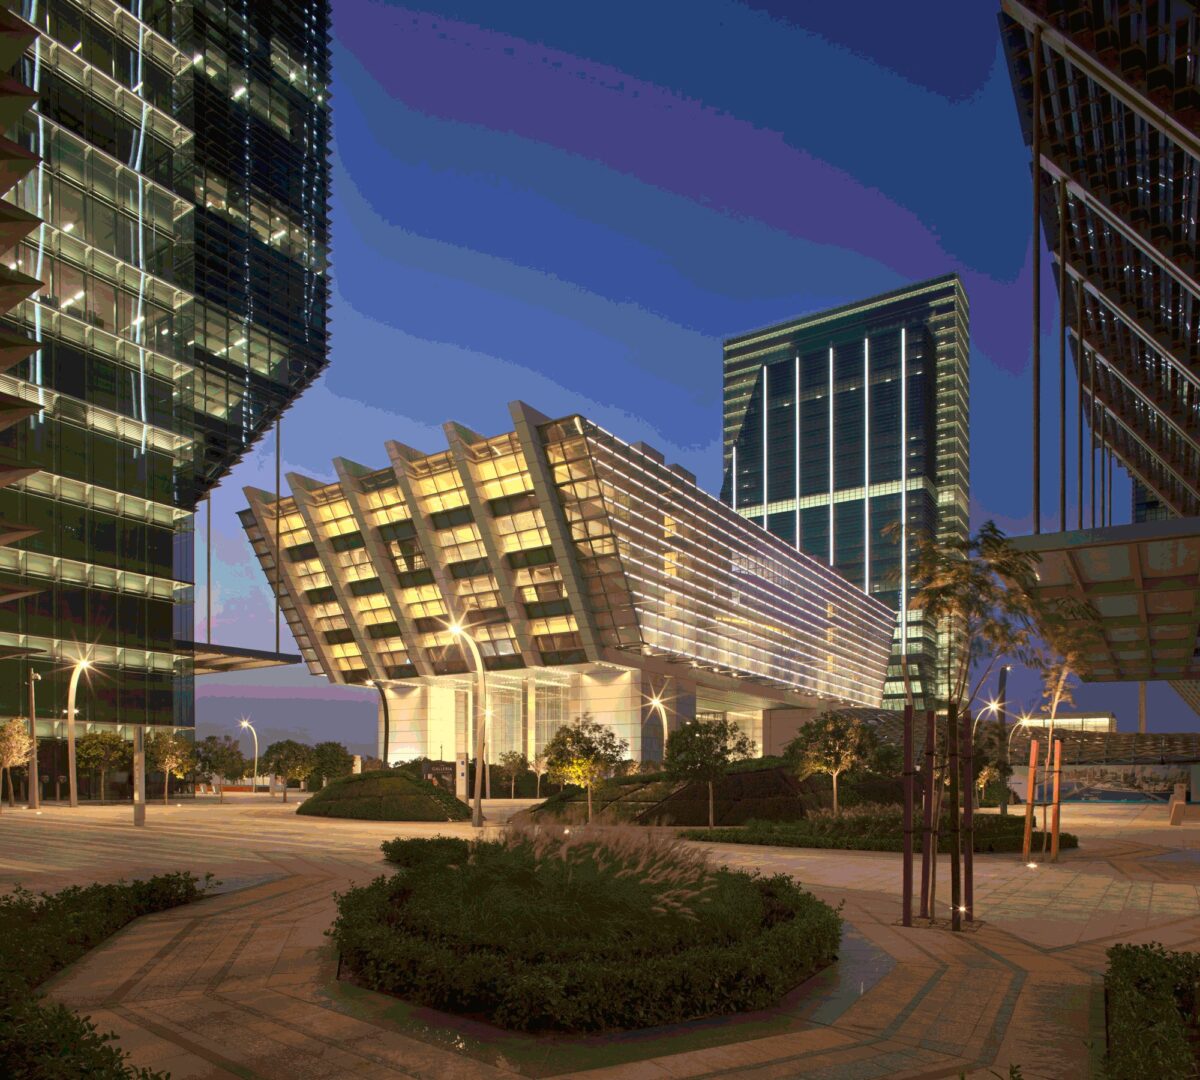 Abu Dhabi Global Market is the main financial centre of Abu Dhabi